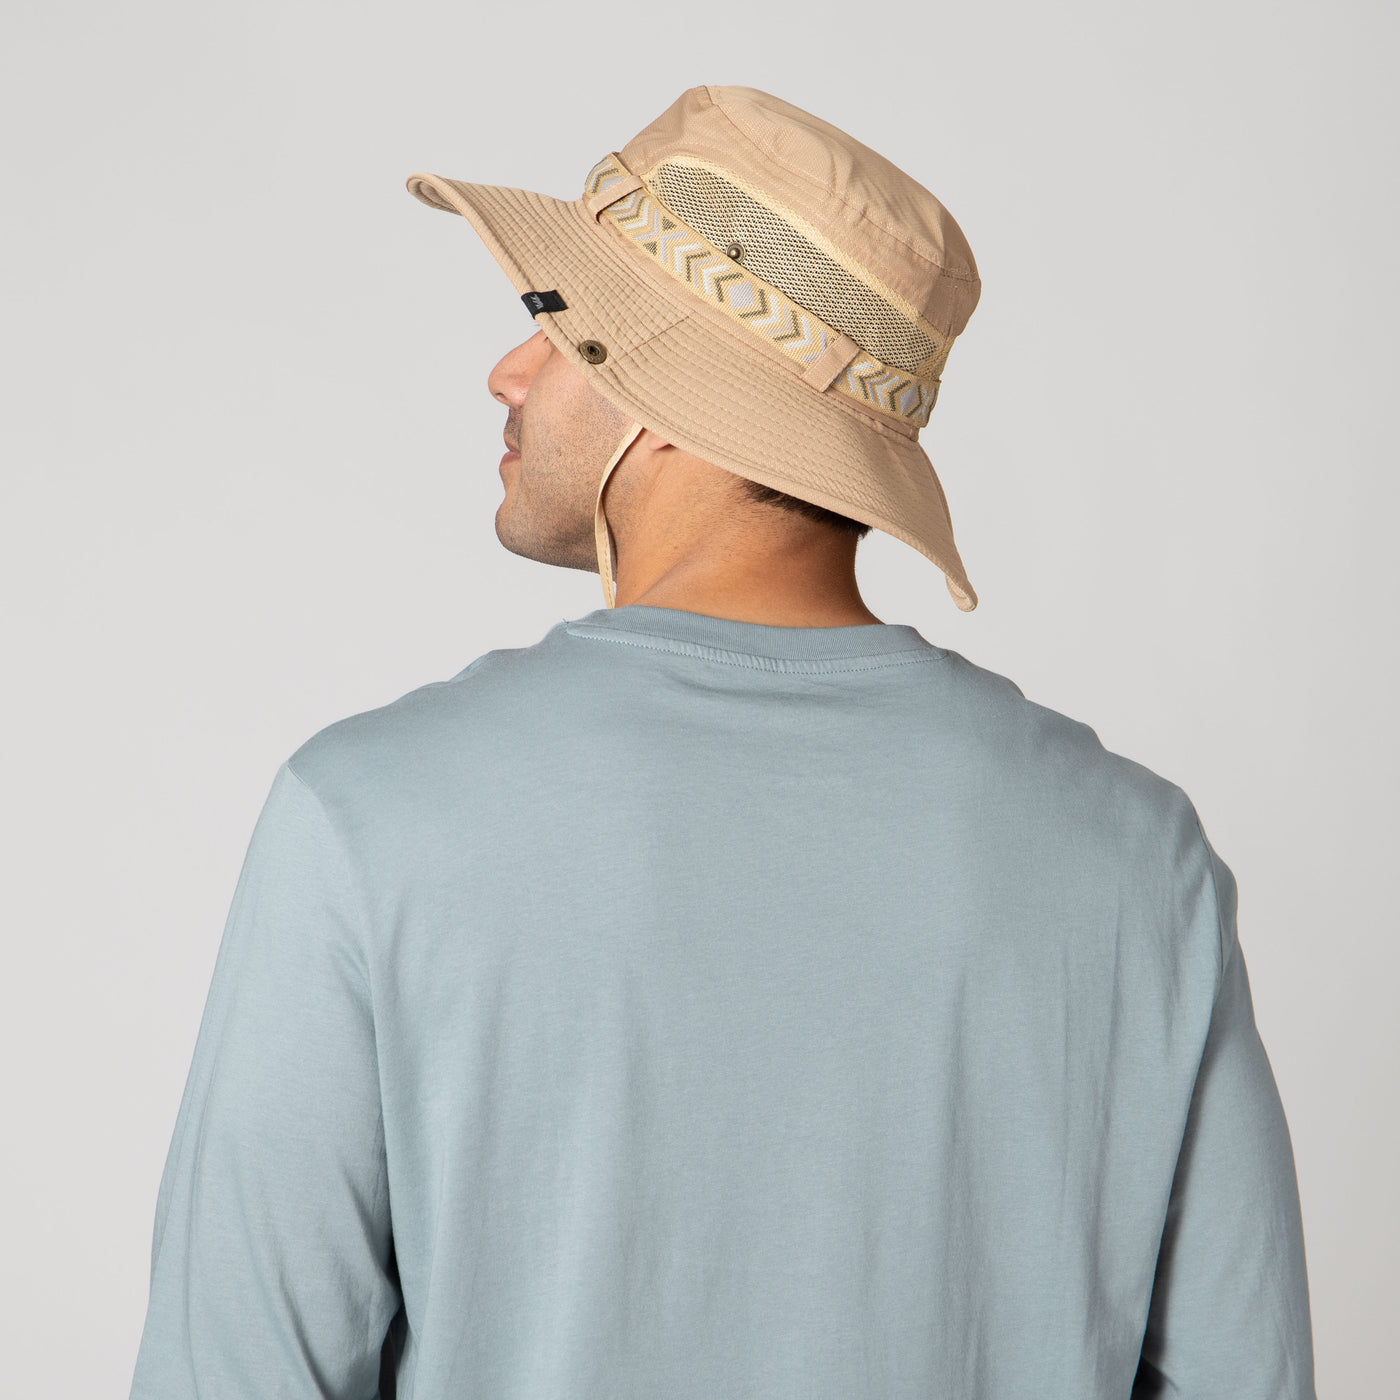 OUTDOOR - Men's Floatable Wide Brim Sun Hat With Jacquard Trim